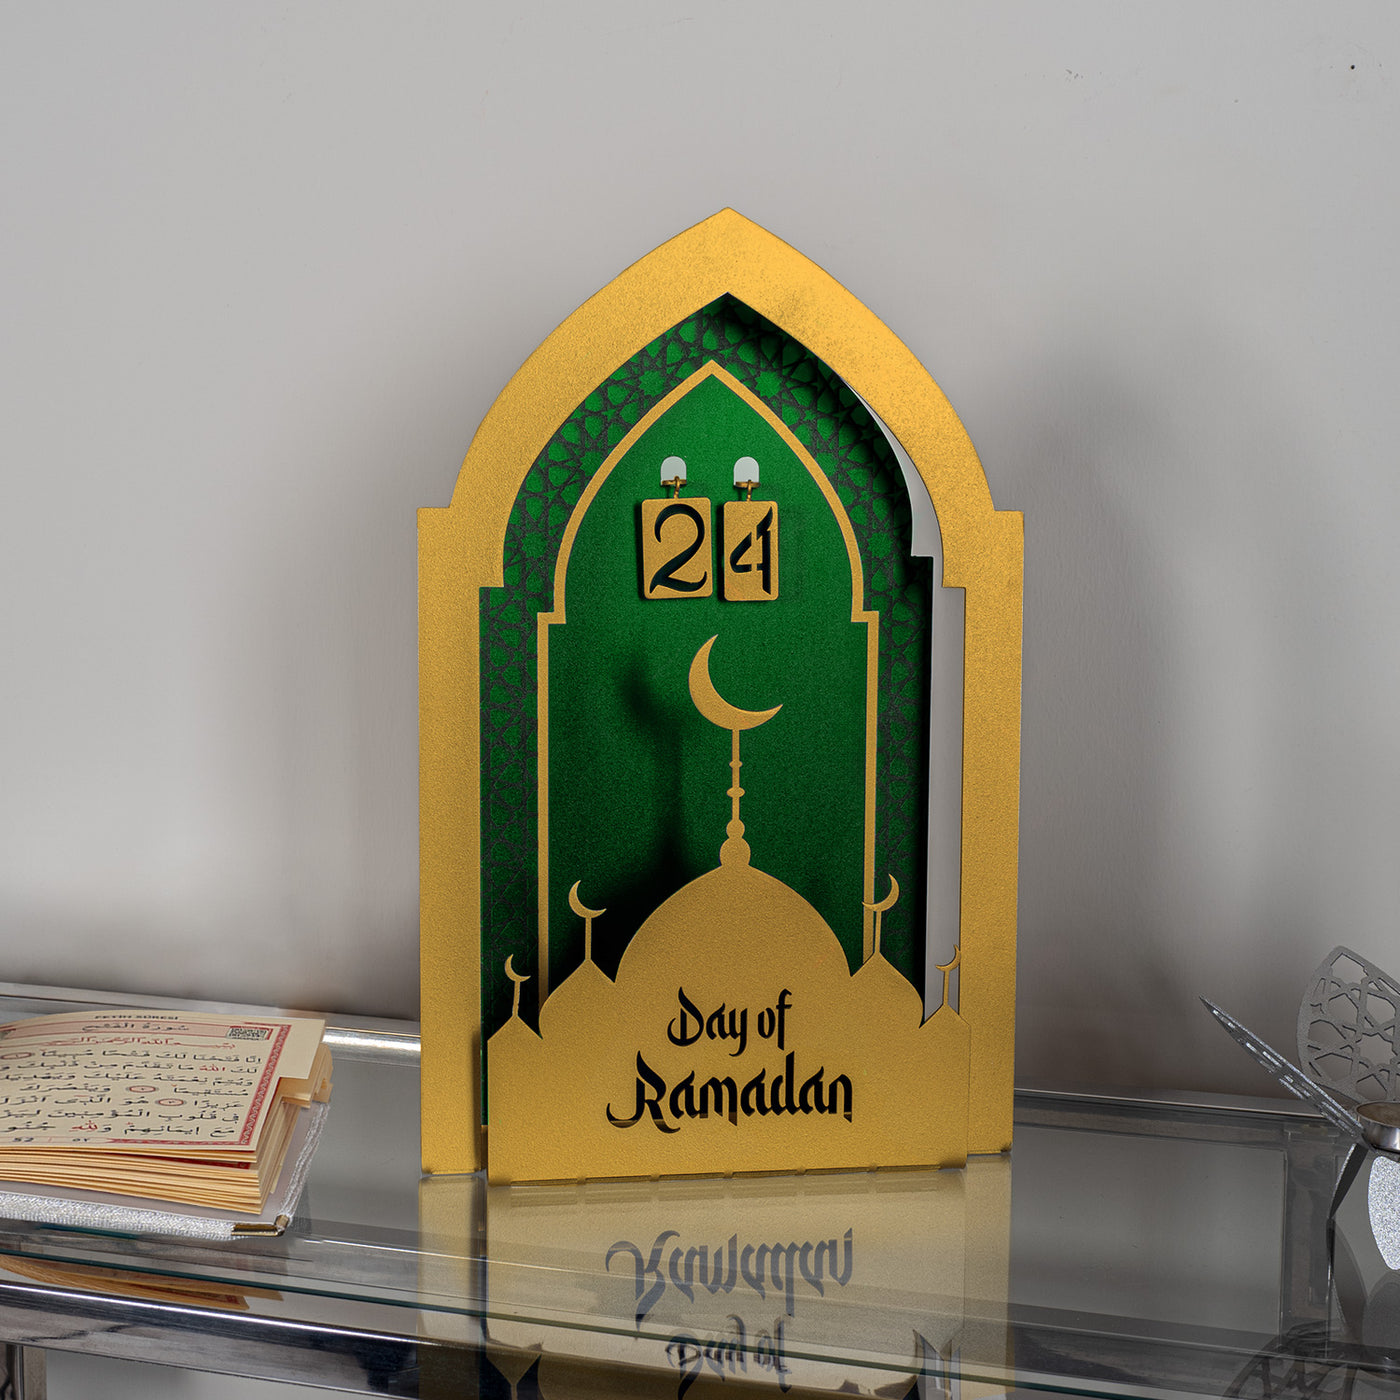 Day of Ramadan Metal Tabletop Decor - WAMH148